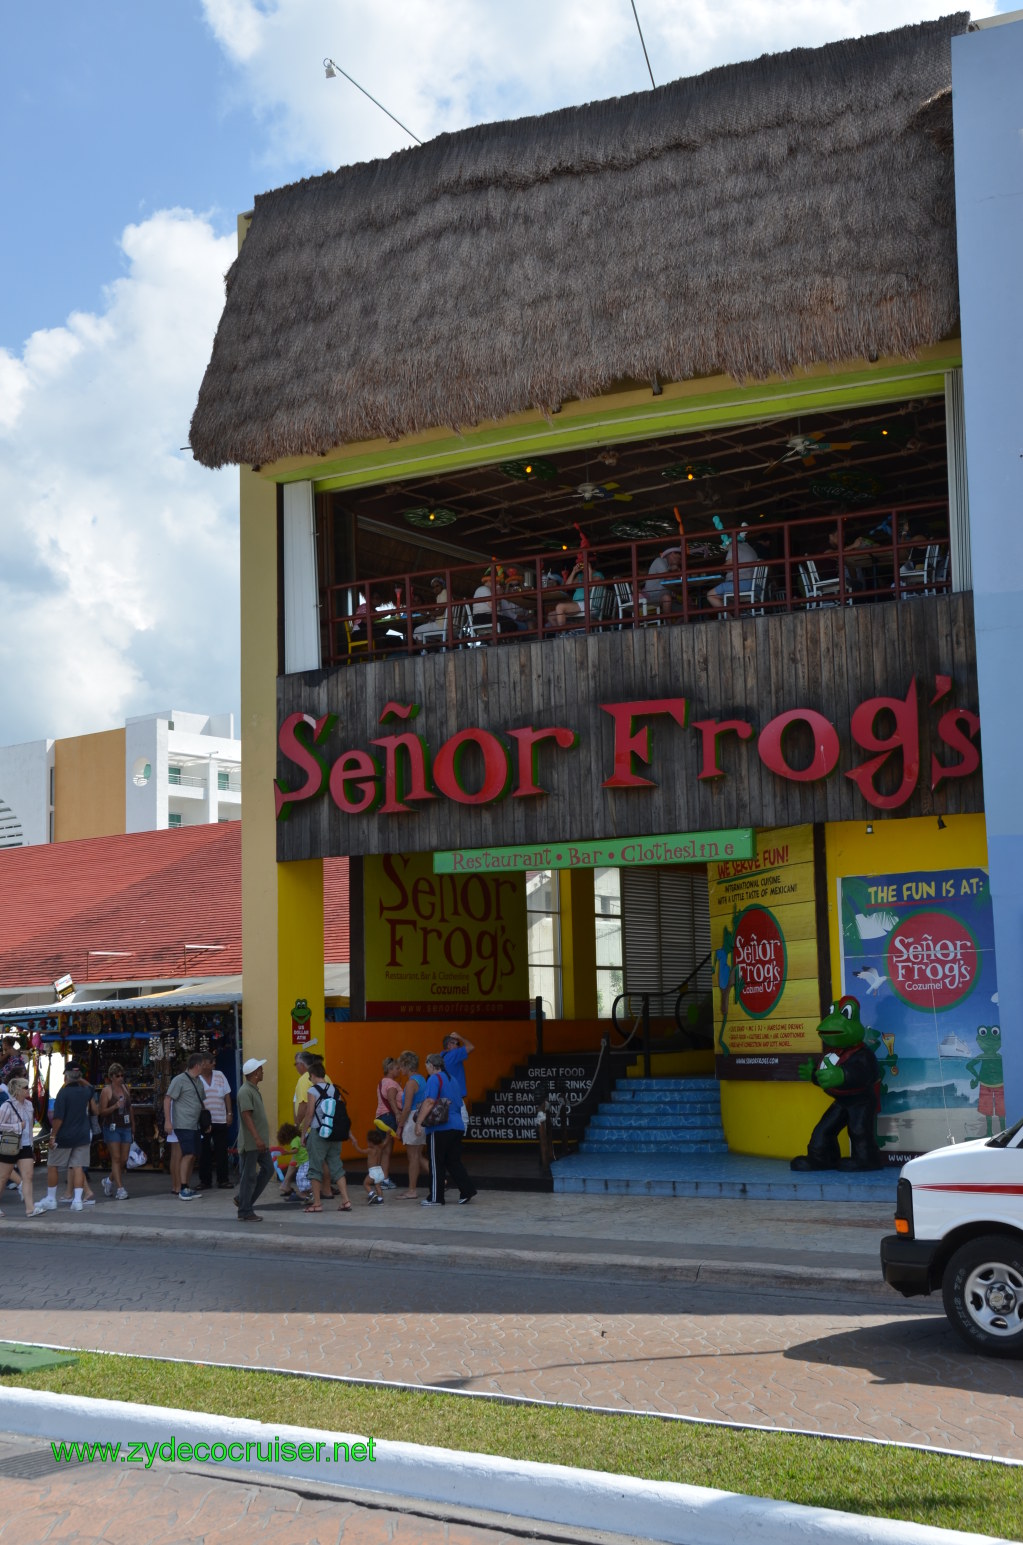 056: Carnival Conquest, Nov 18. 2011, Cozumel, Senior Frog's